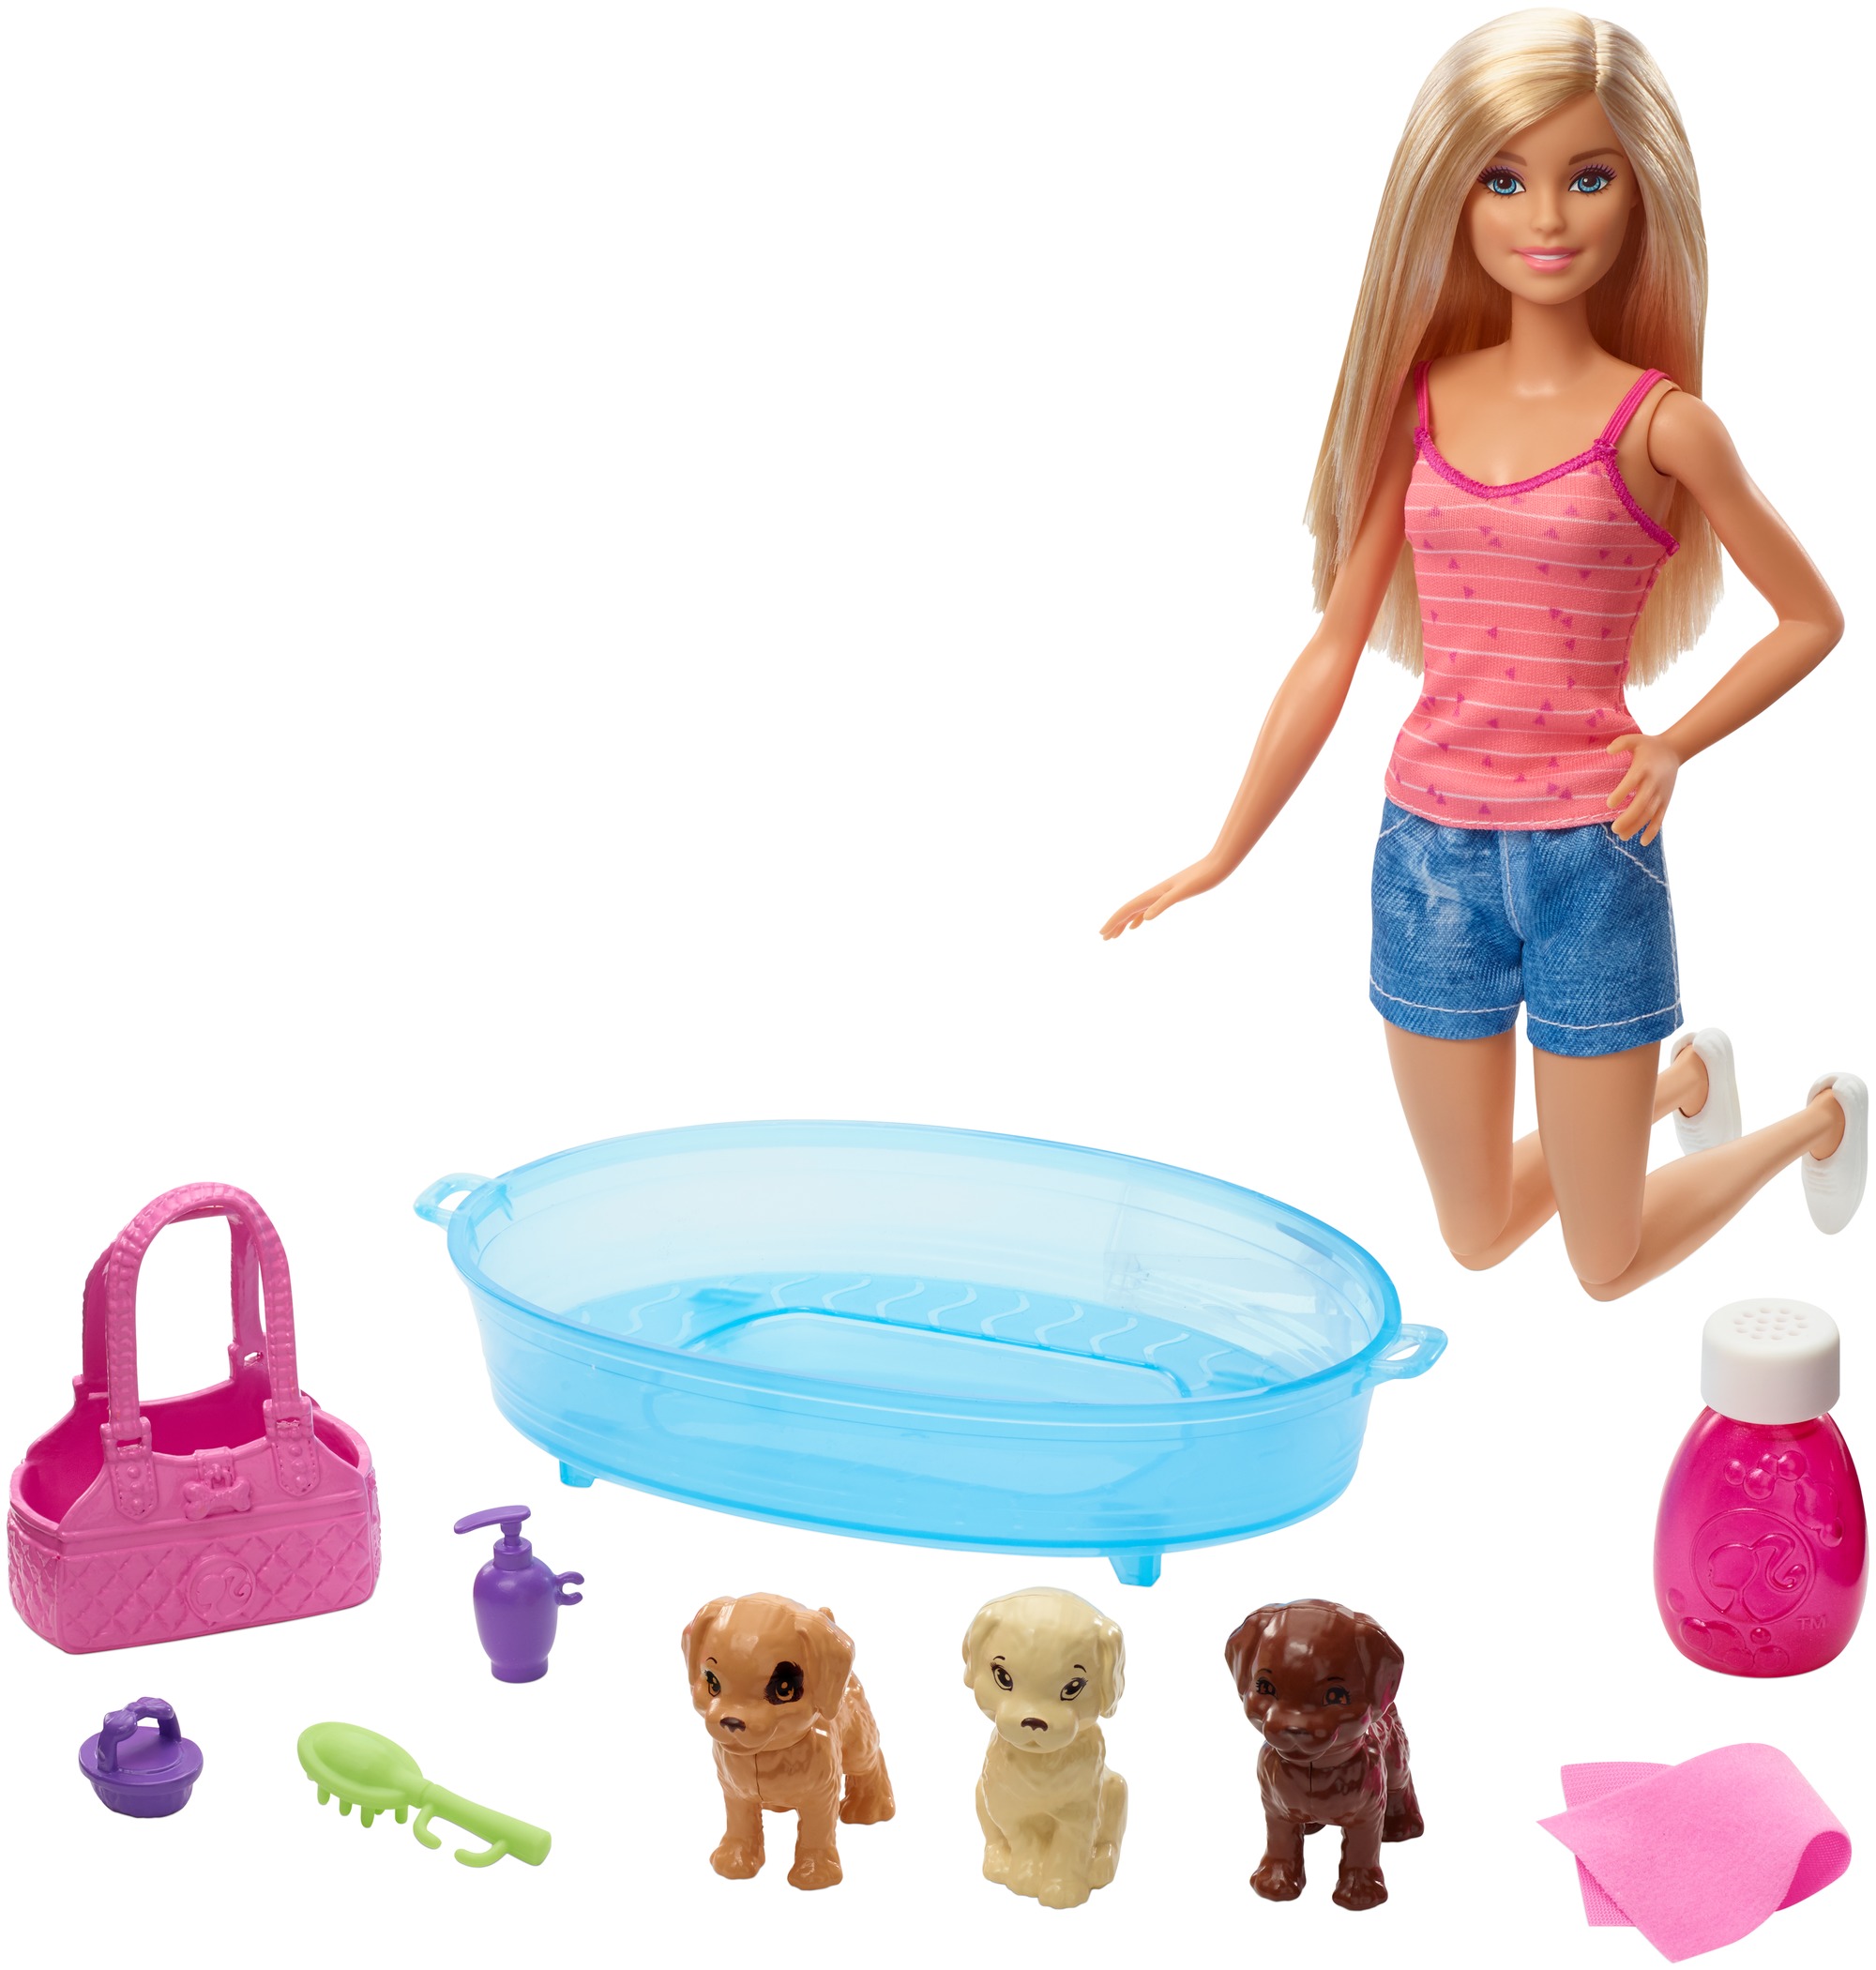 Barbie Puppy Bath Time Playset